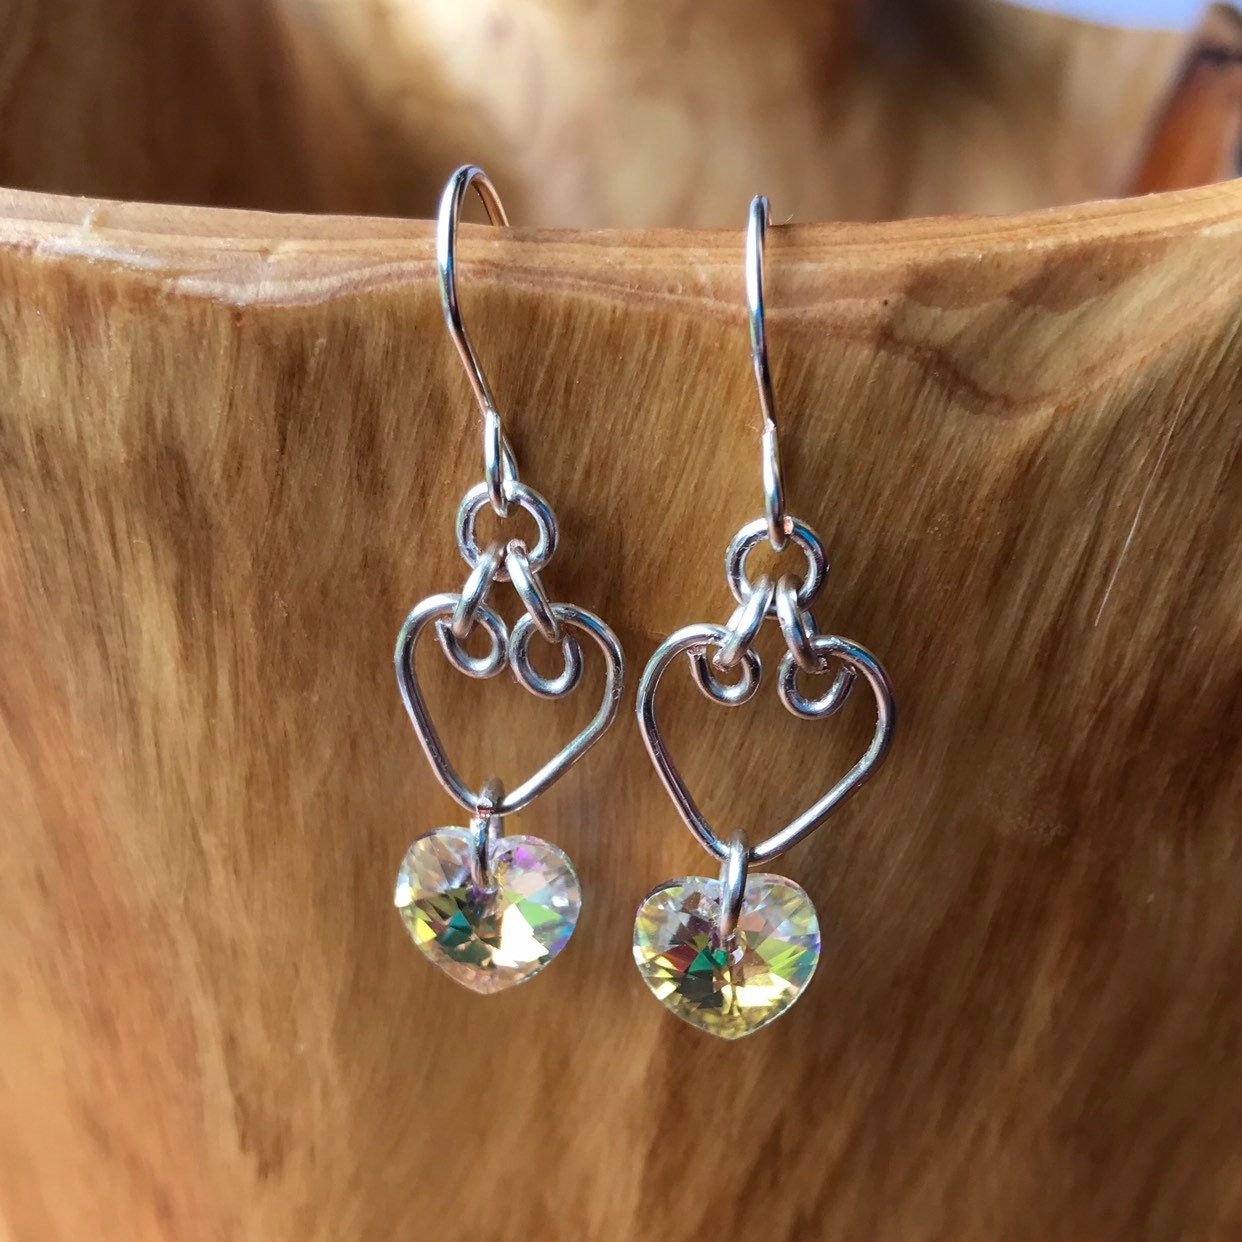 Swarovski Crystal Bella Heart Pierced Earrings, Pink Rose-Gold Plated  5515192 - Four Seasons Jewelry